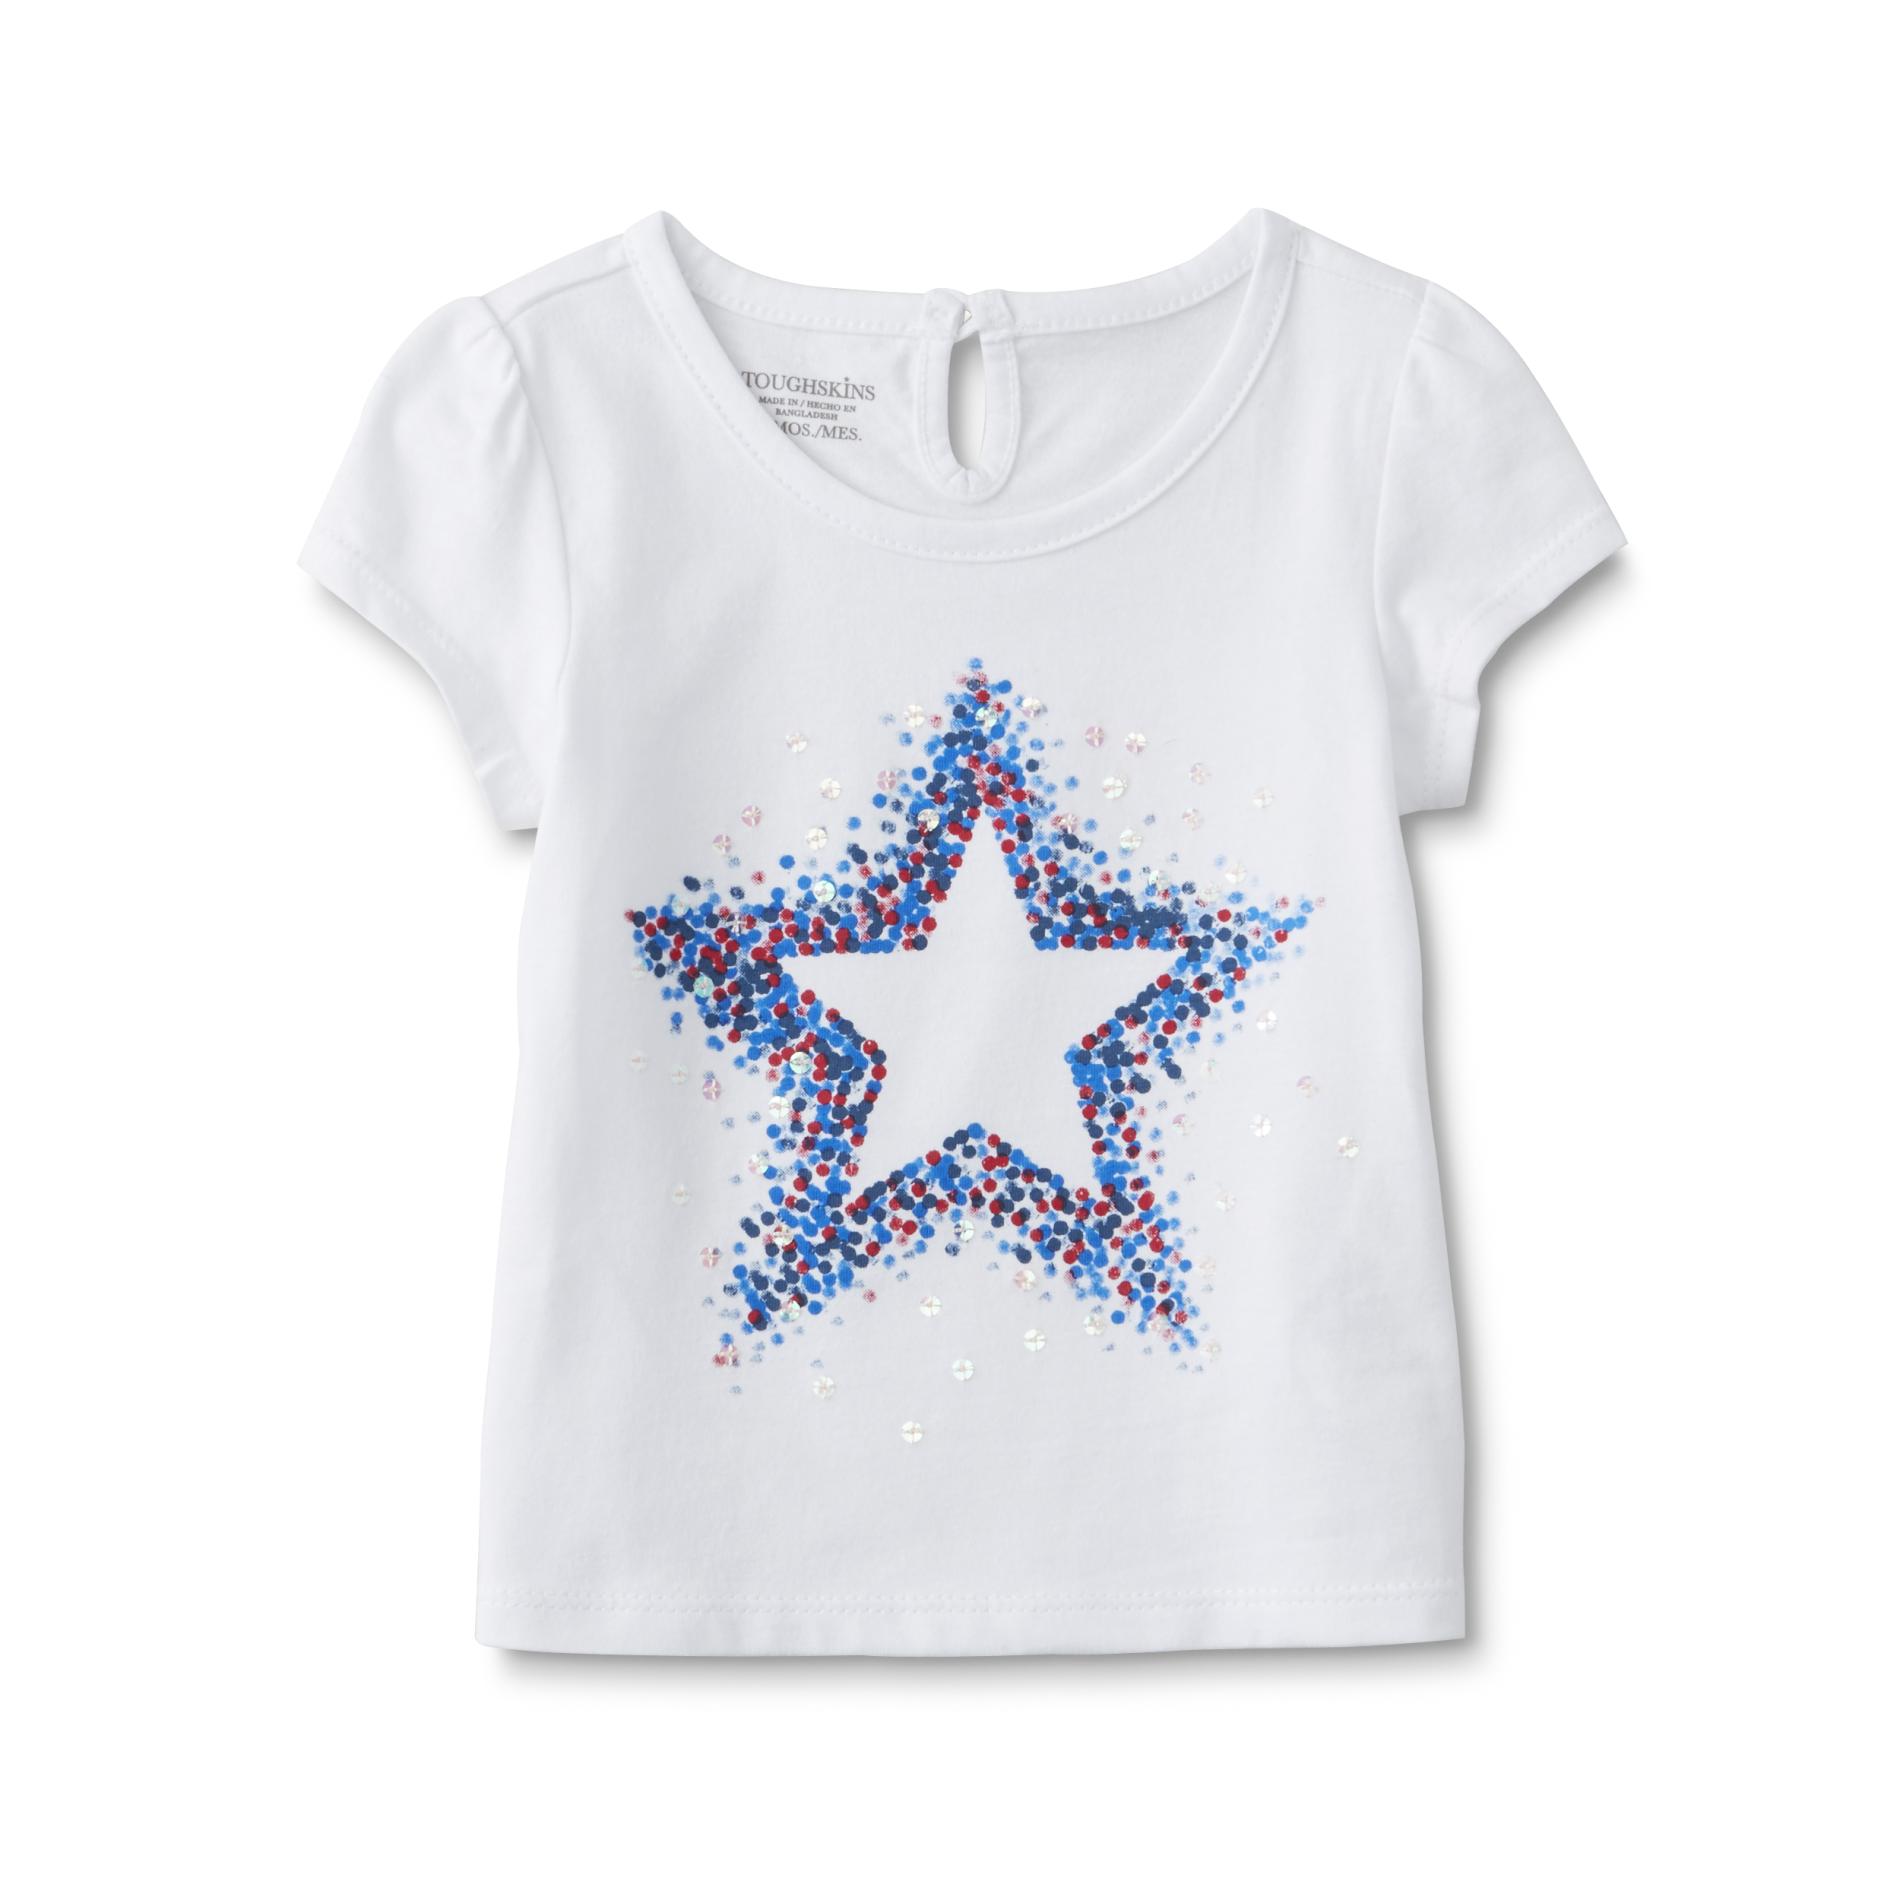 Toughskins Infant & Toddler Girl's Graphic T-Shirt - Stars